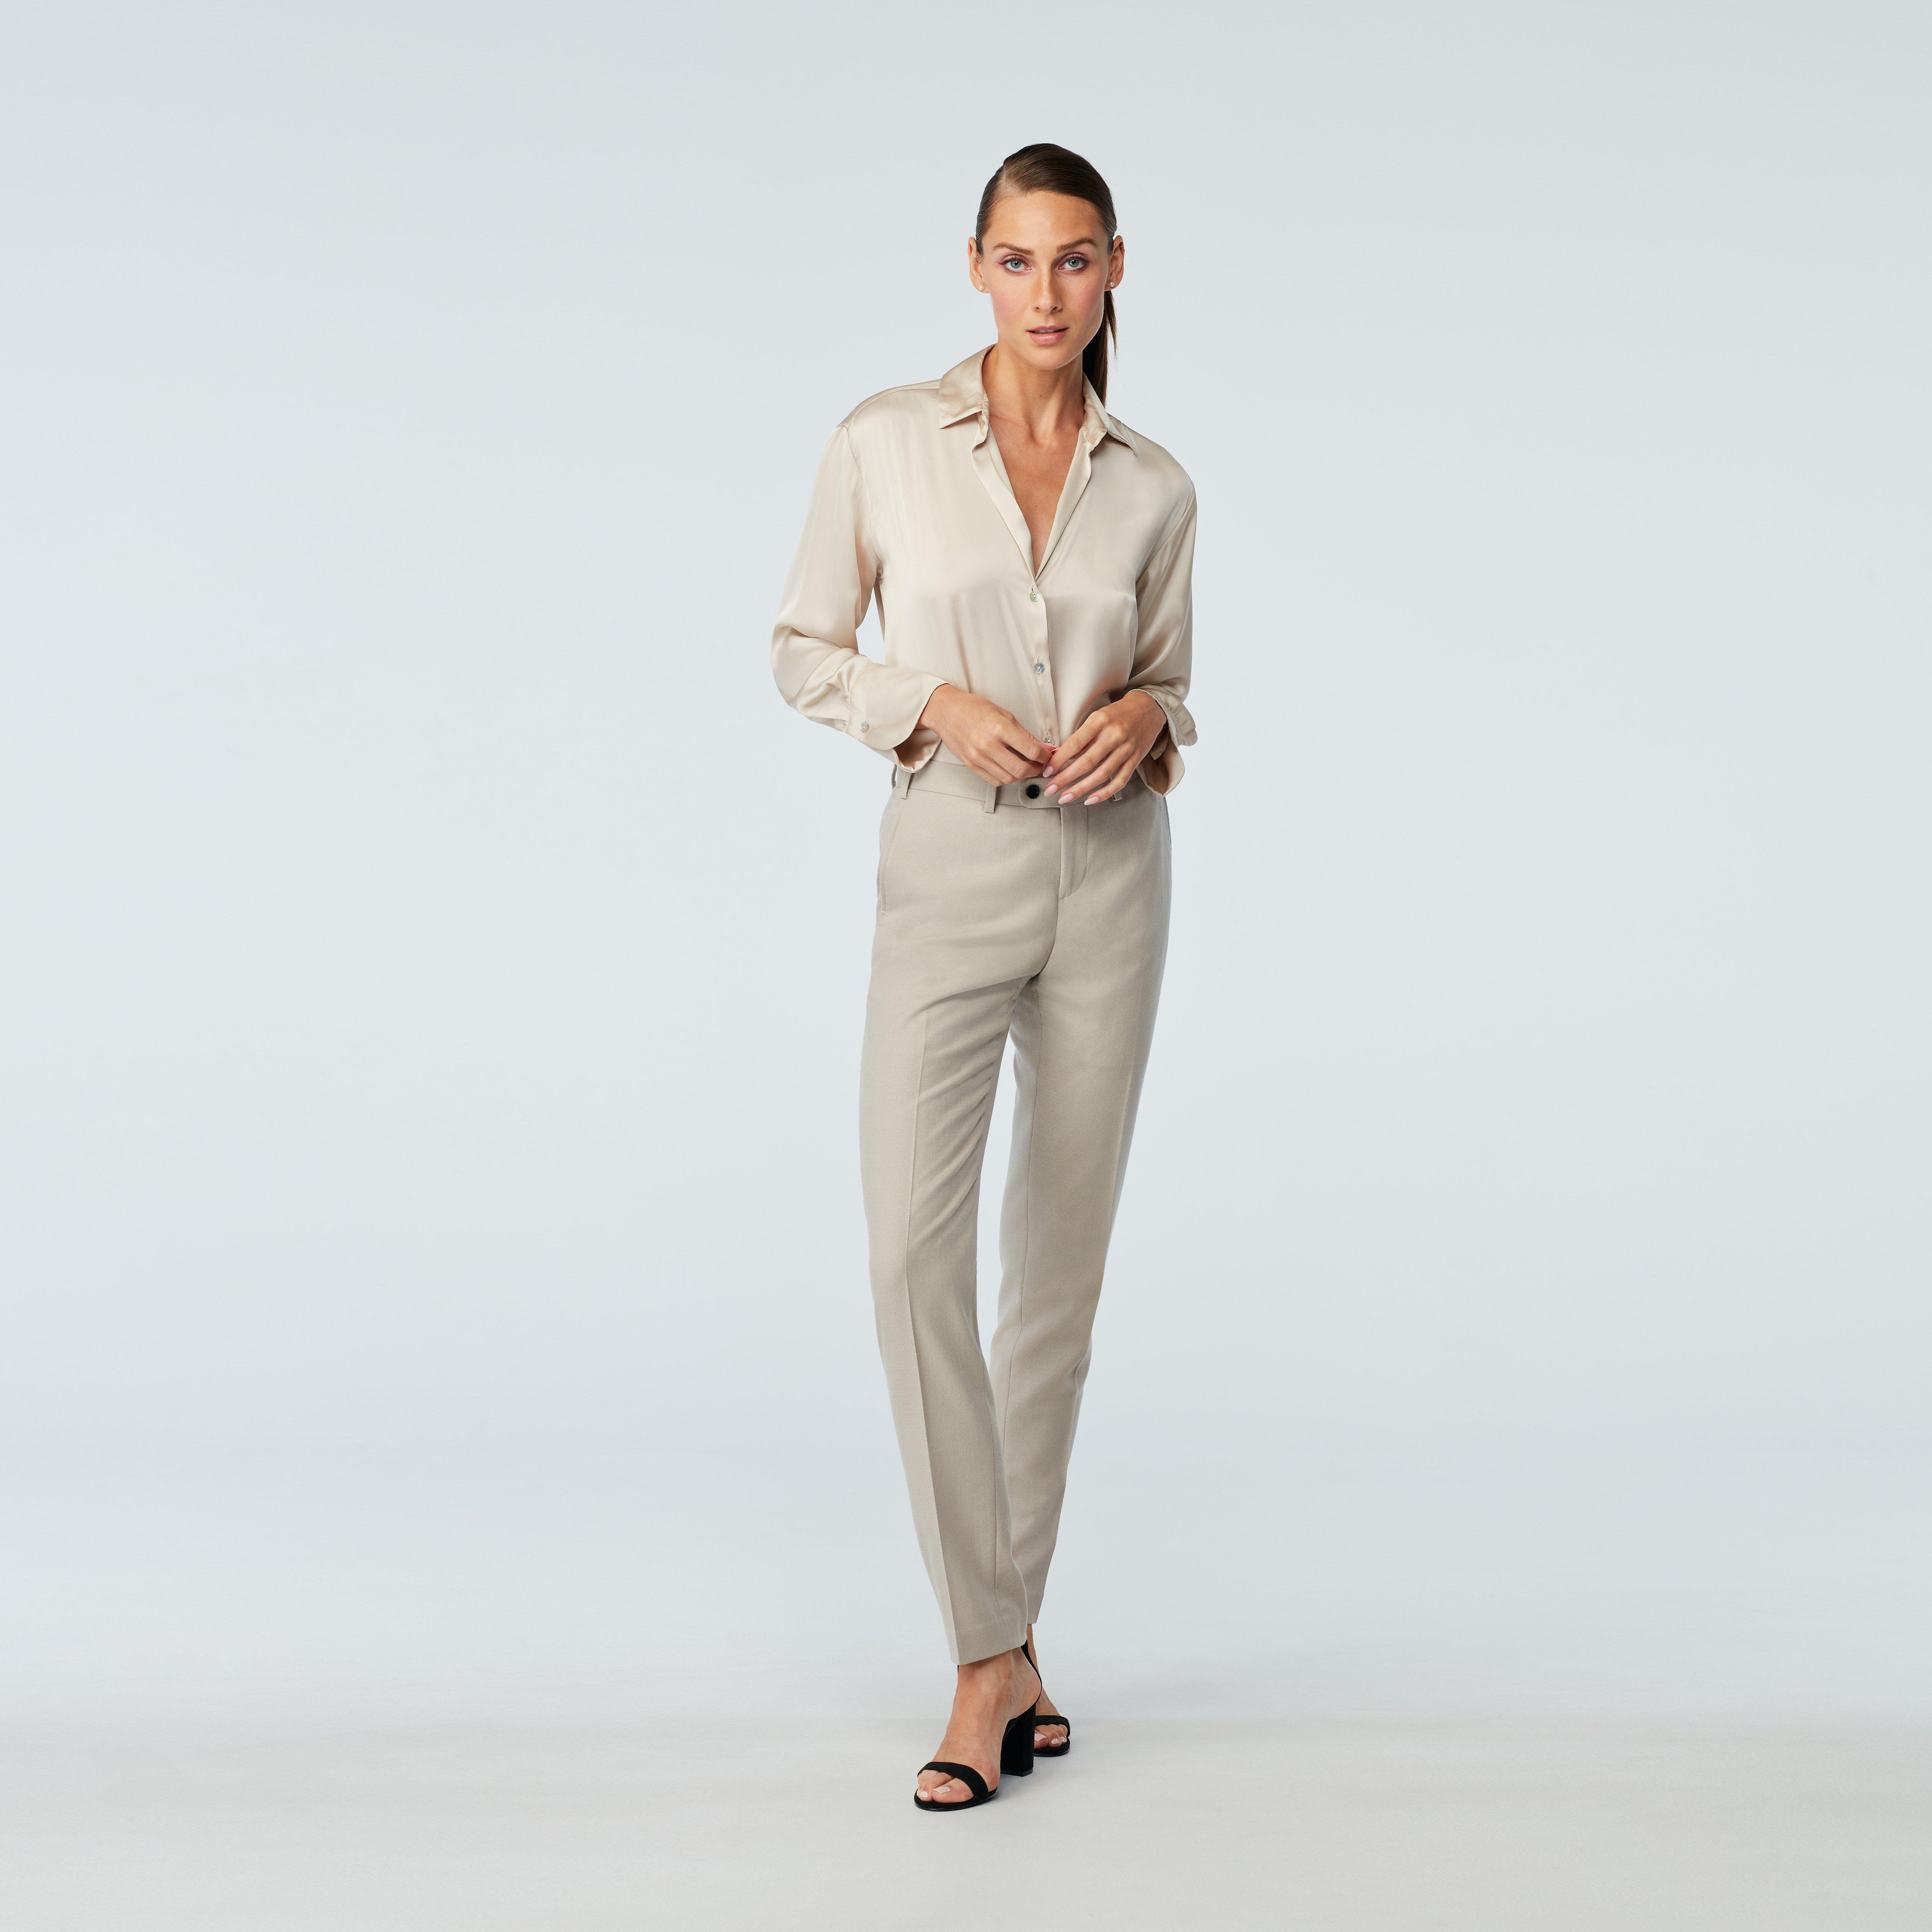 Buy Online Women's Pants Palazzo Off White